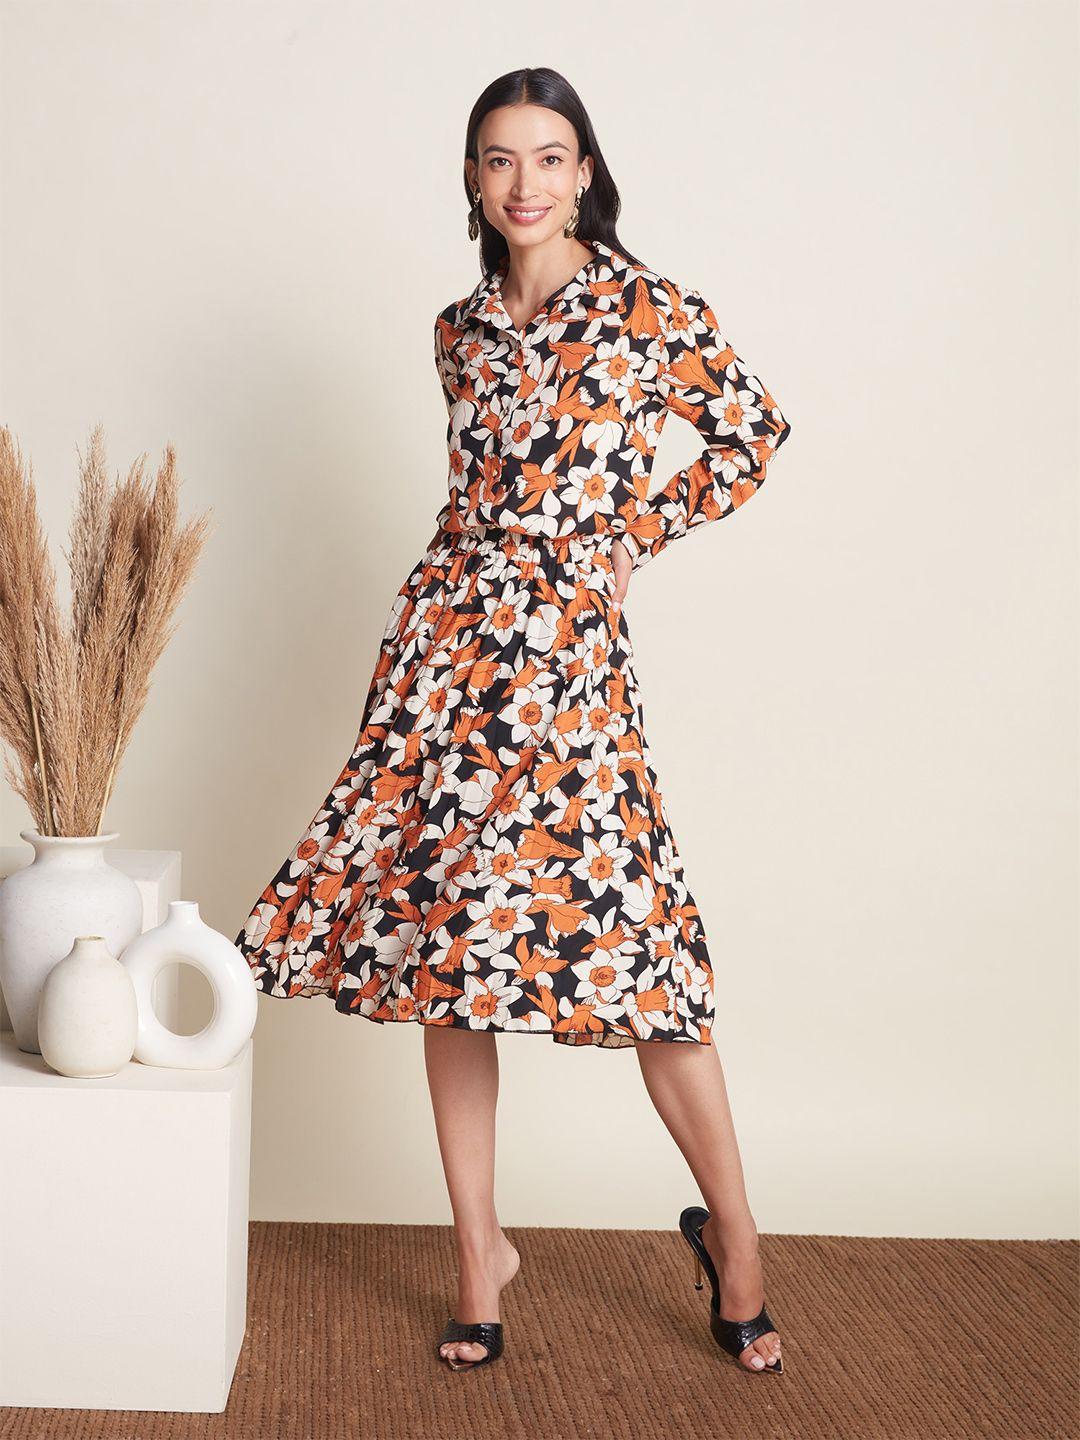 20dresses women comfort floral printed casual shirt